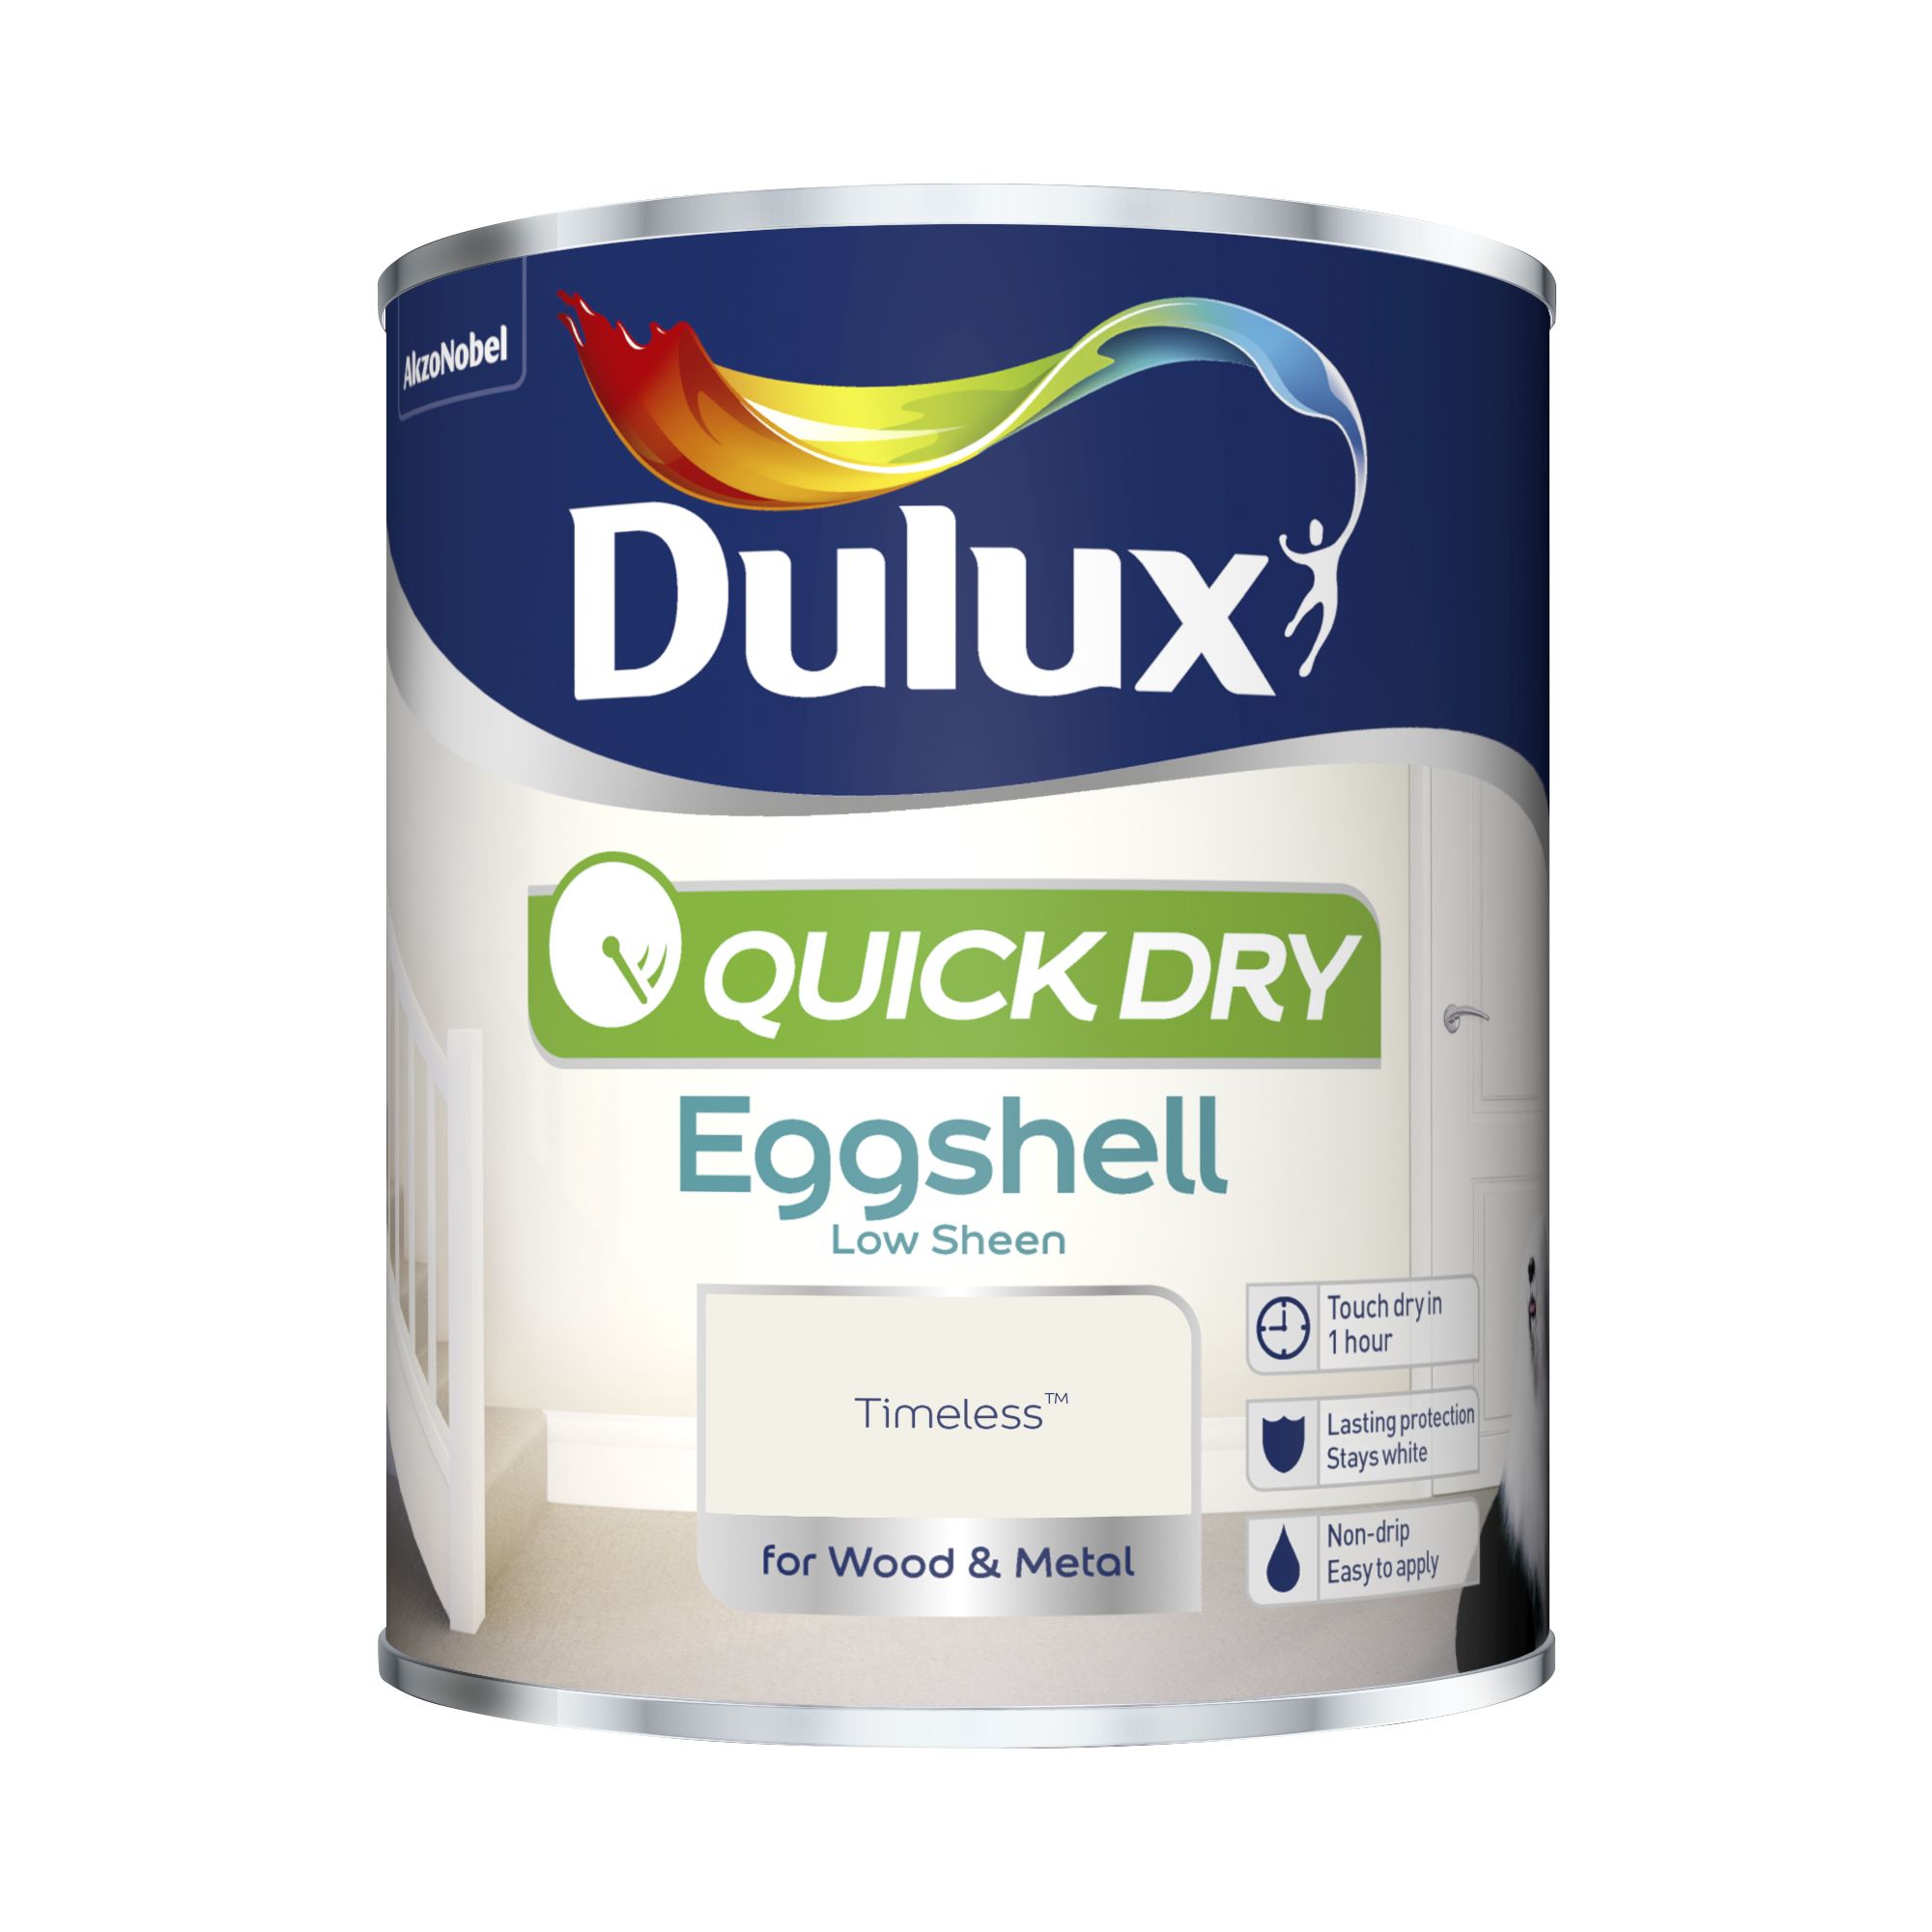 Dulux Timeless Eggshell Metal & wood paint, 750ml